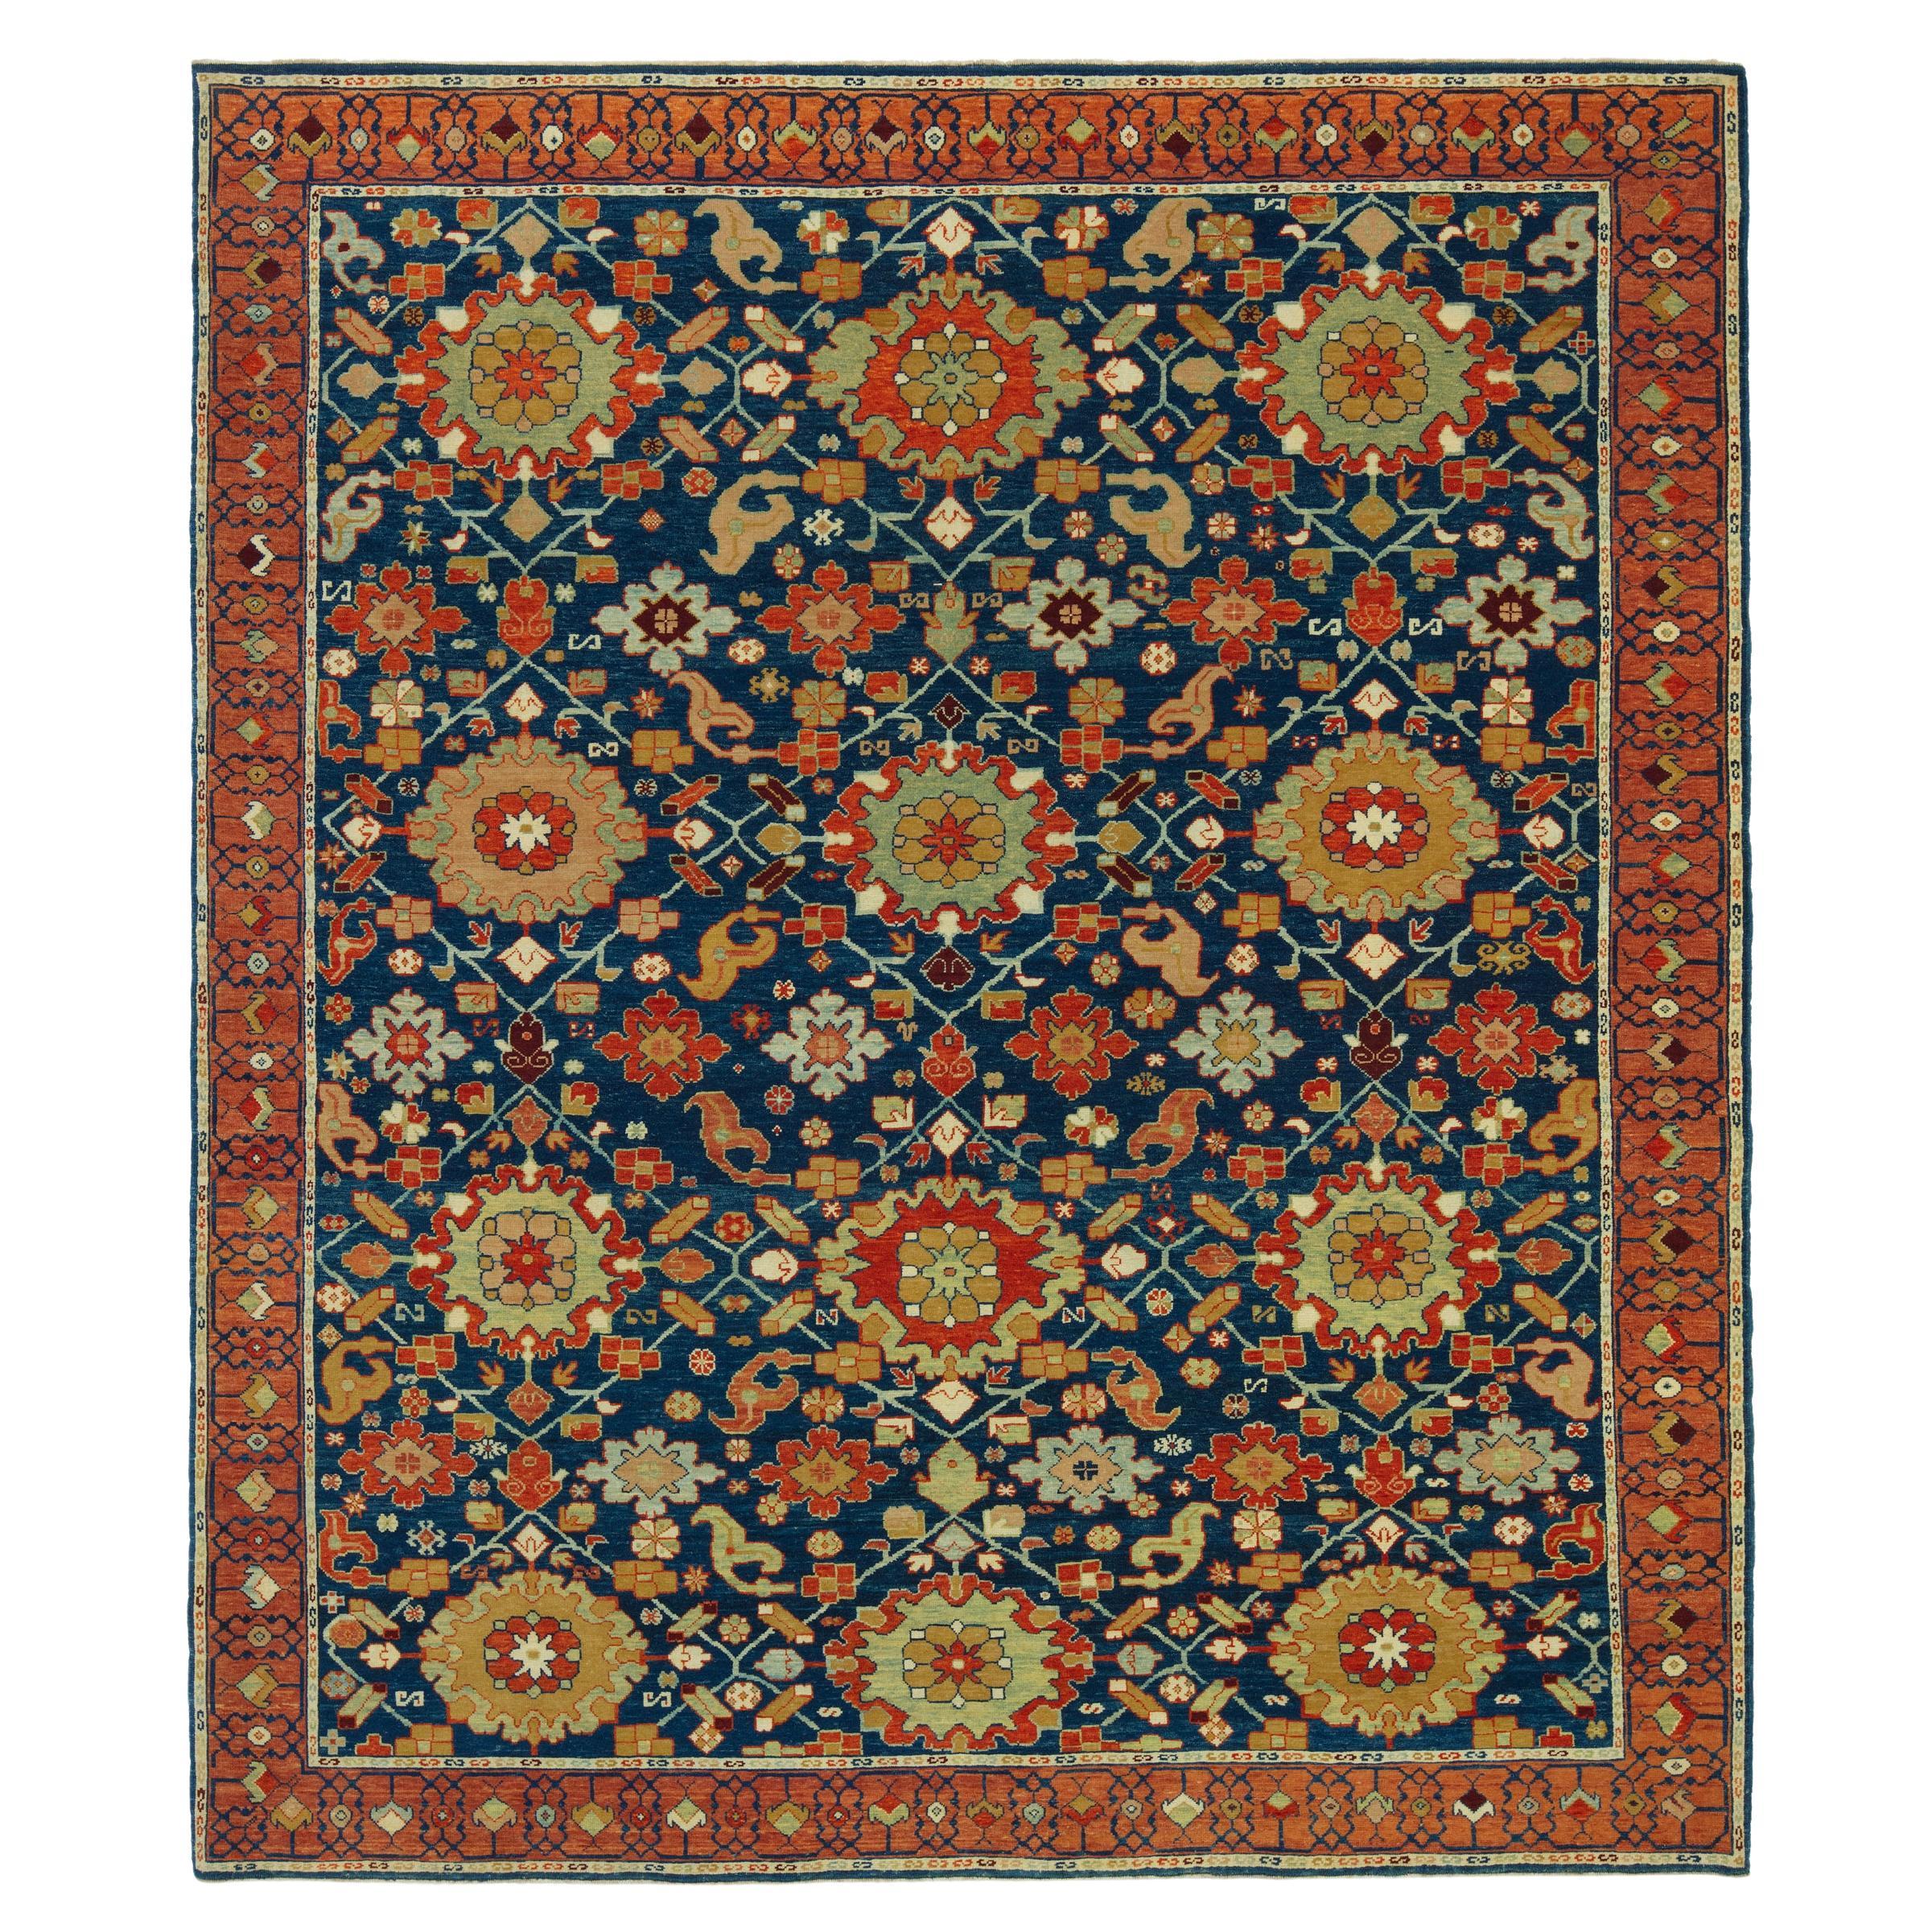 Ararat Rugs Palmettes and Flowers Lattice Rug Antique Revival Carpet Natural Dye For Sale